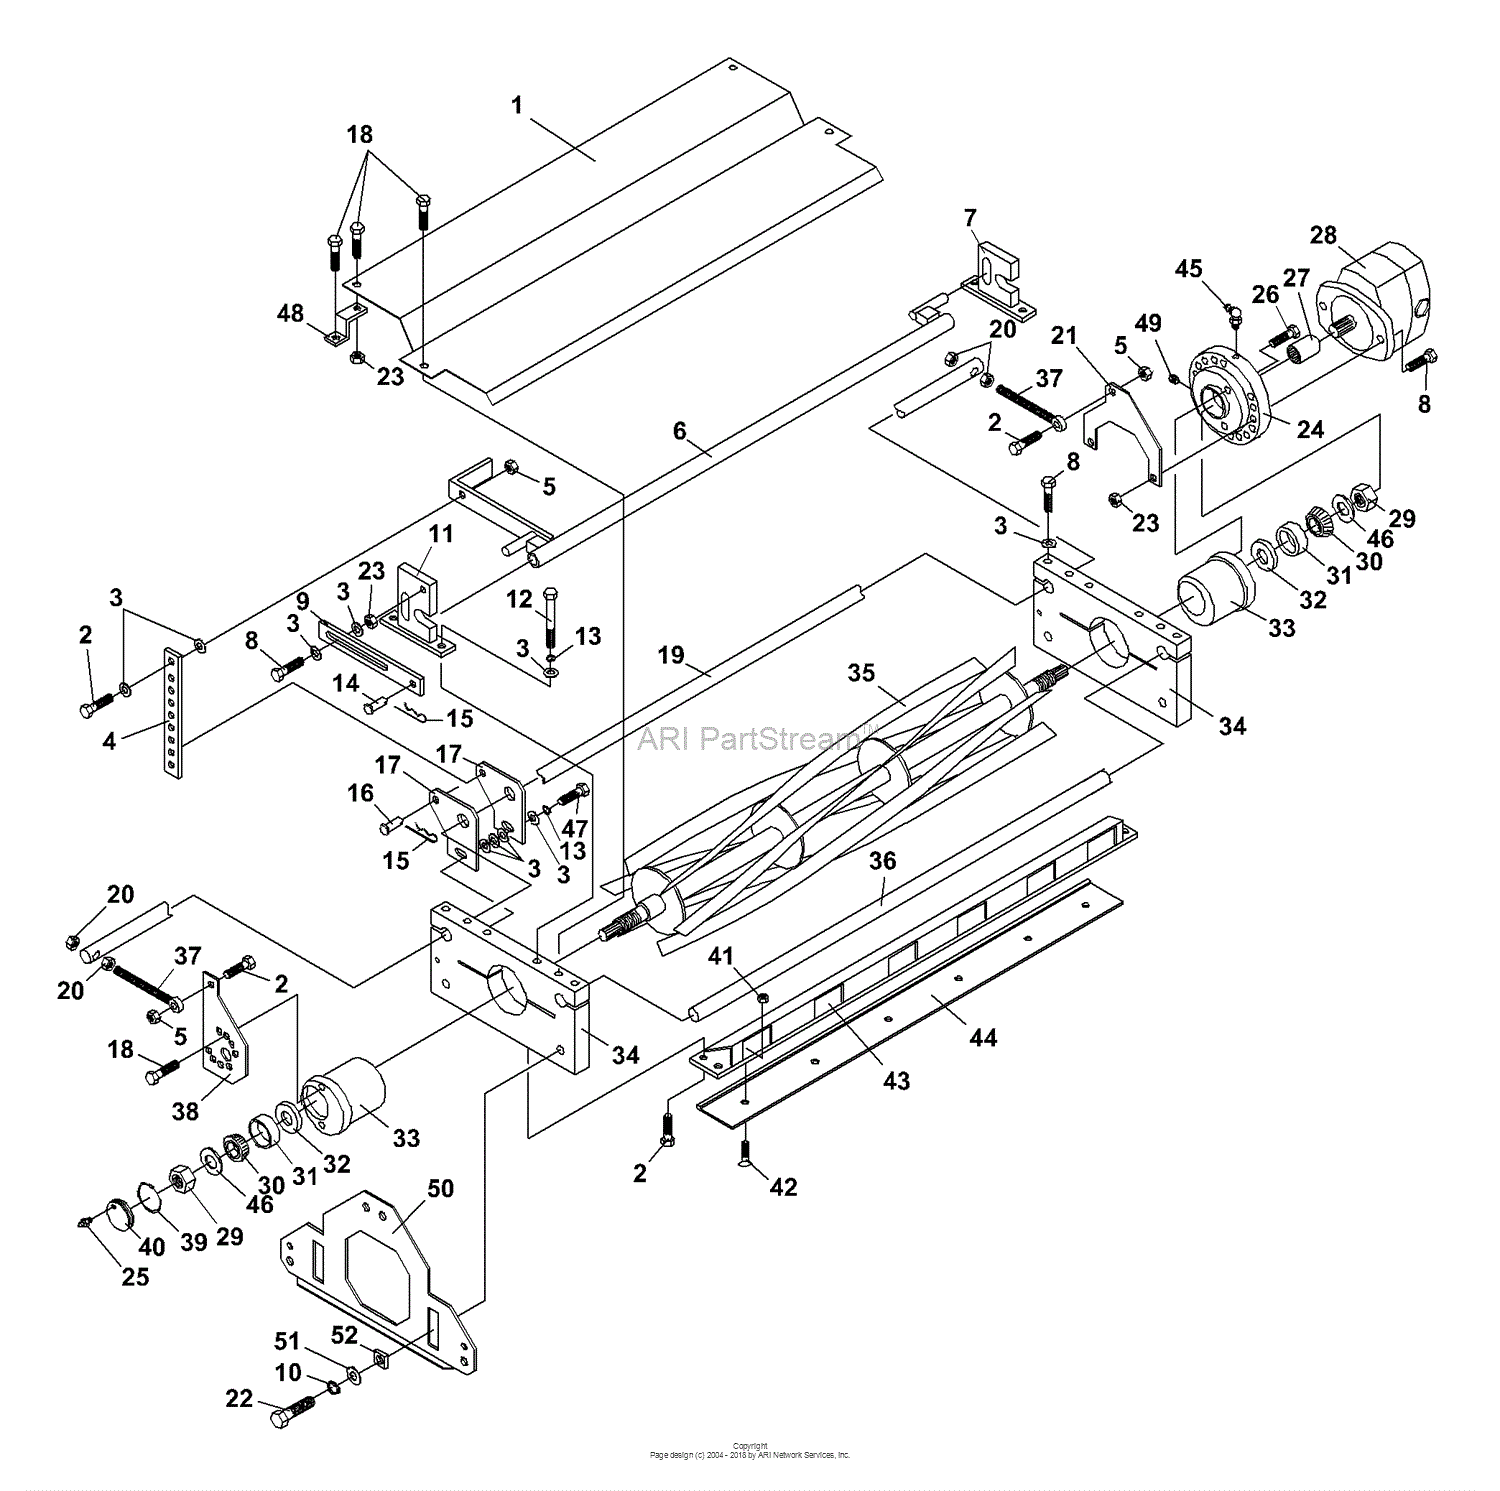 https://az417944.vo.msecnd.net/diagrams/manufacturer/bobcat/steiner/attachments/73-70885-triplex-reel-mower-6-blade-74-c-rm674-jacobsen/reels-parts-typical/diagram.gif